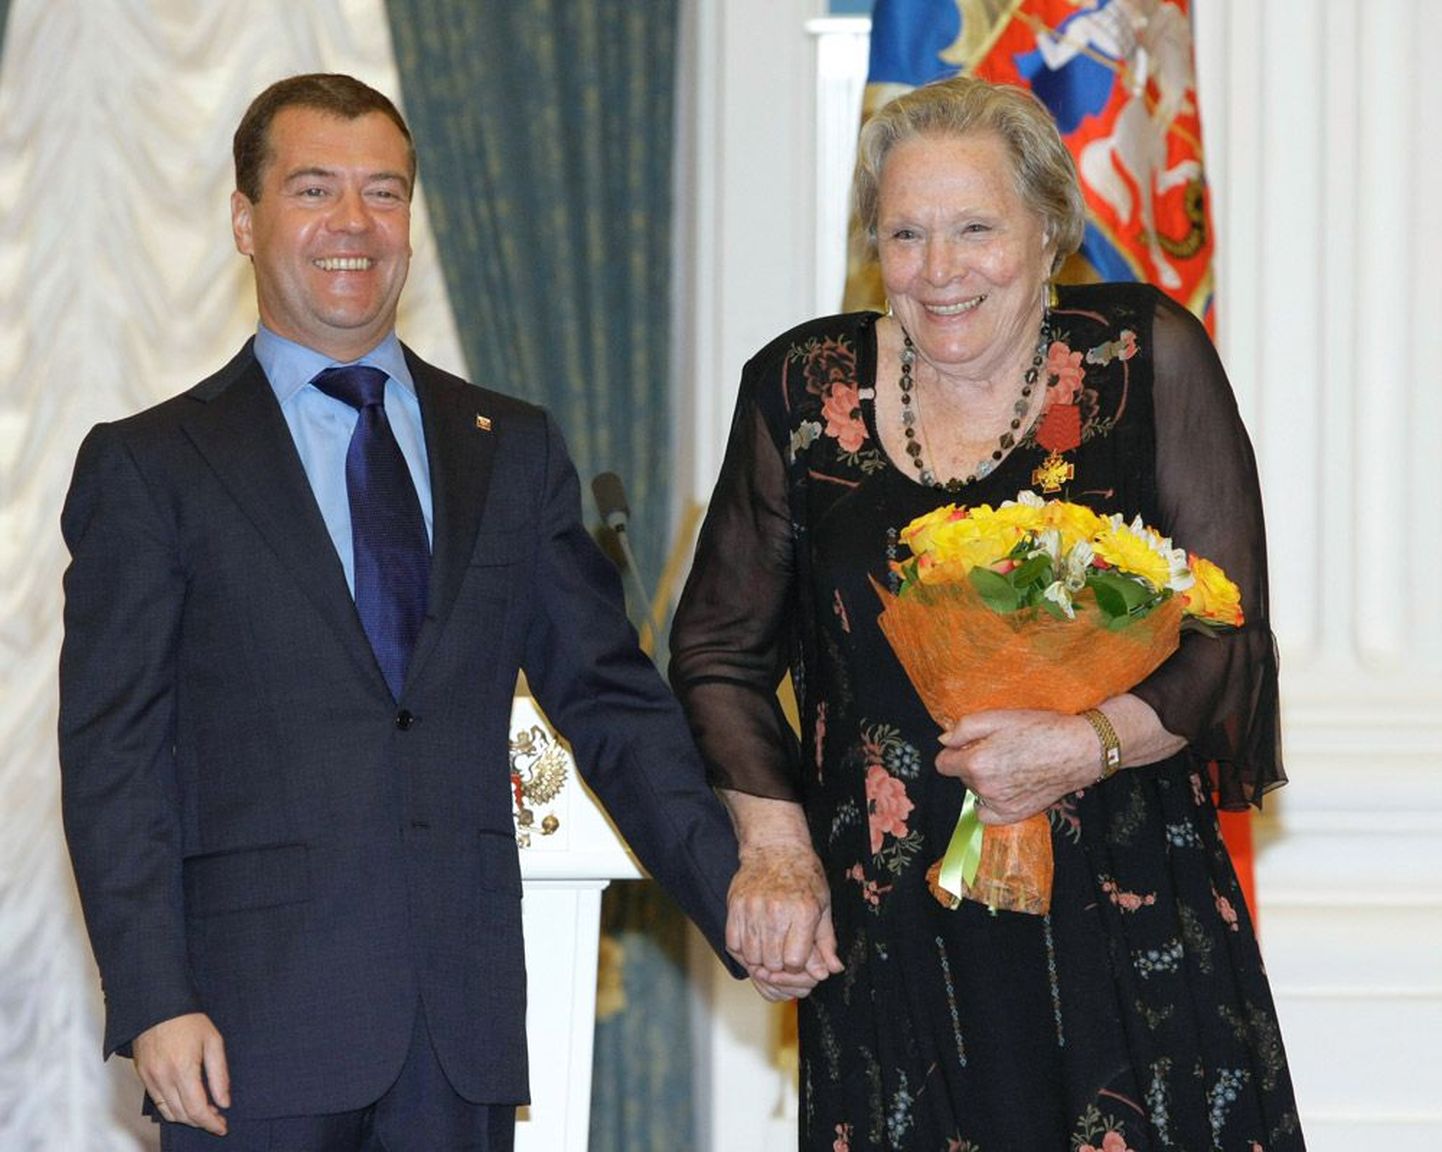 Орден «За заслуги перед Отечеством» IV степени присвоен актрисе театра и кино Римме Марковой, отметившей в марте этого года 85-летие.